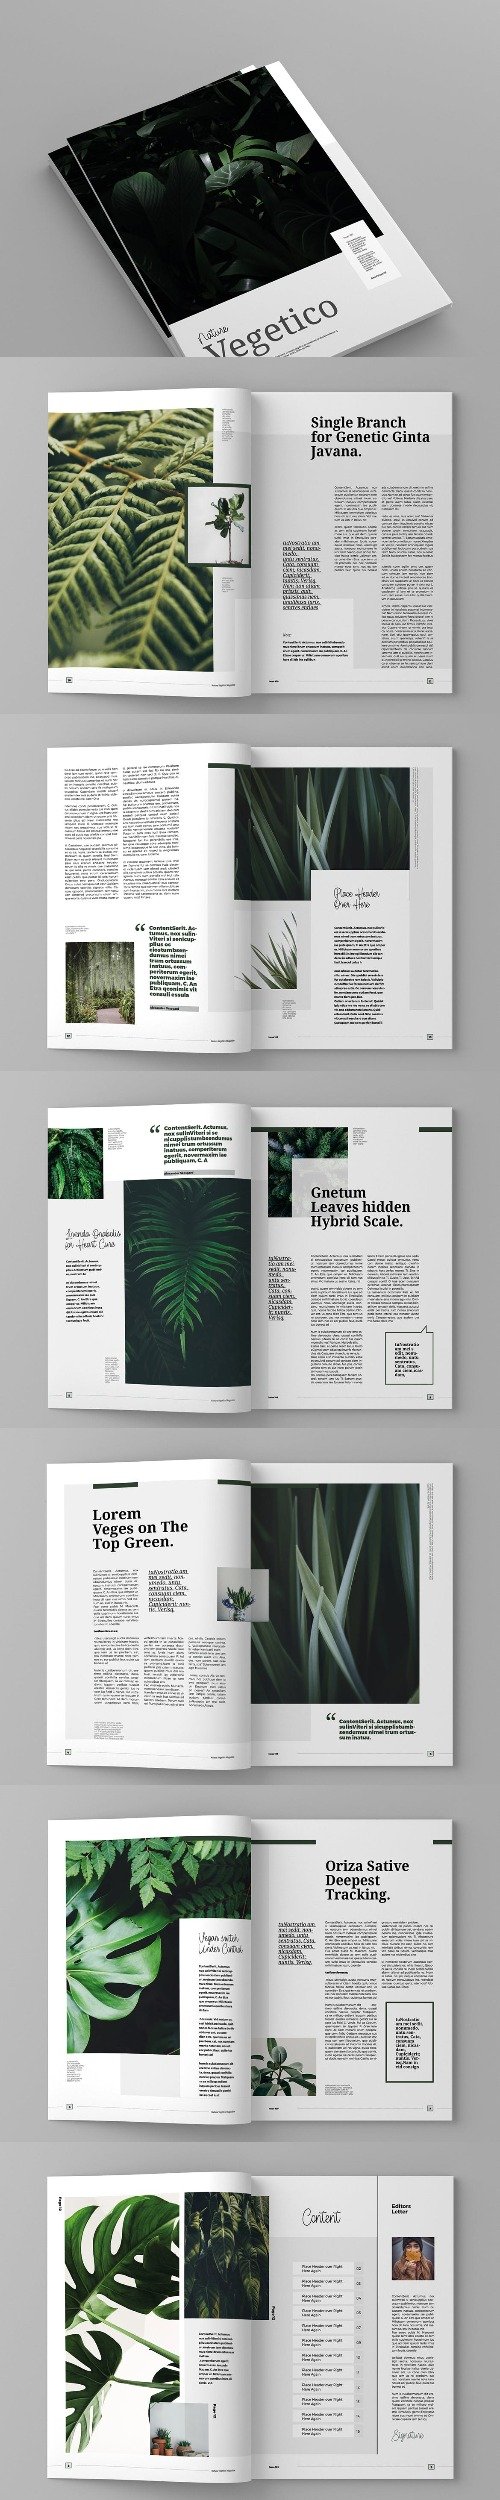 Nature Vegetico - Magazine Template